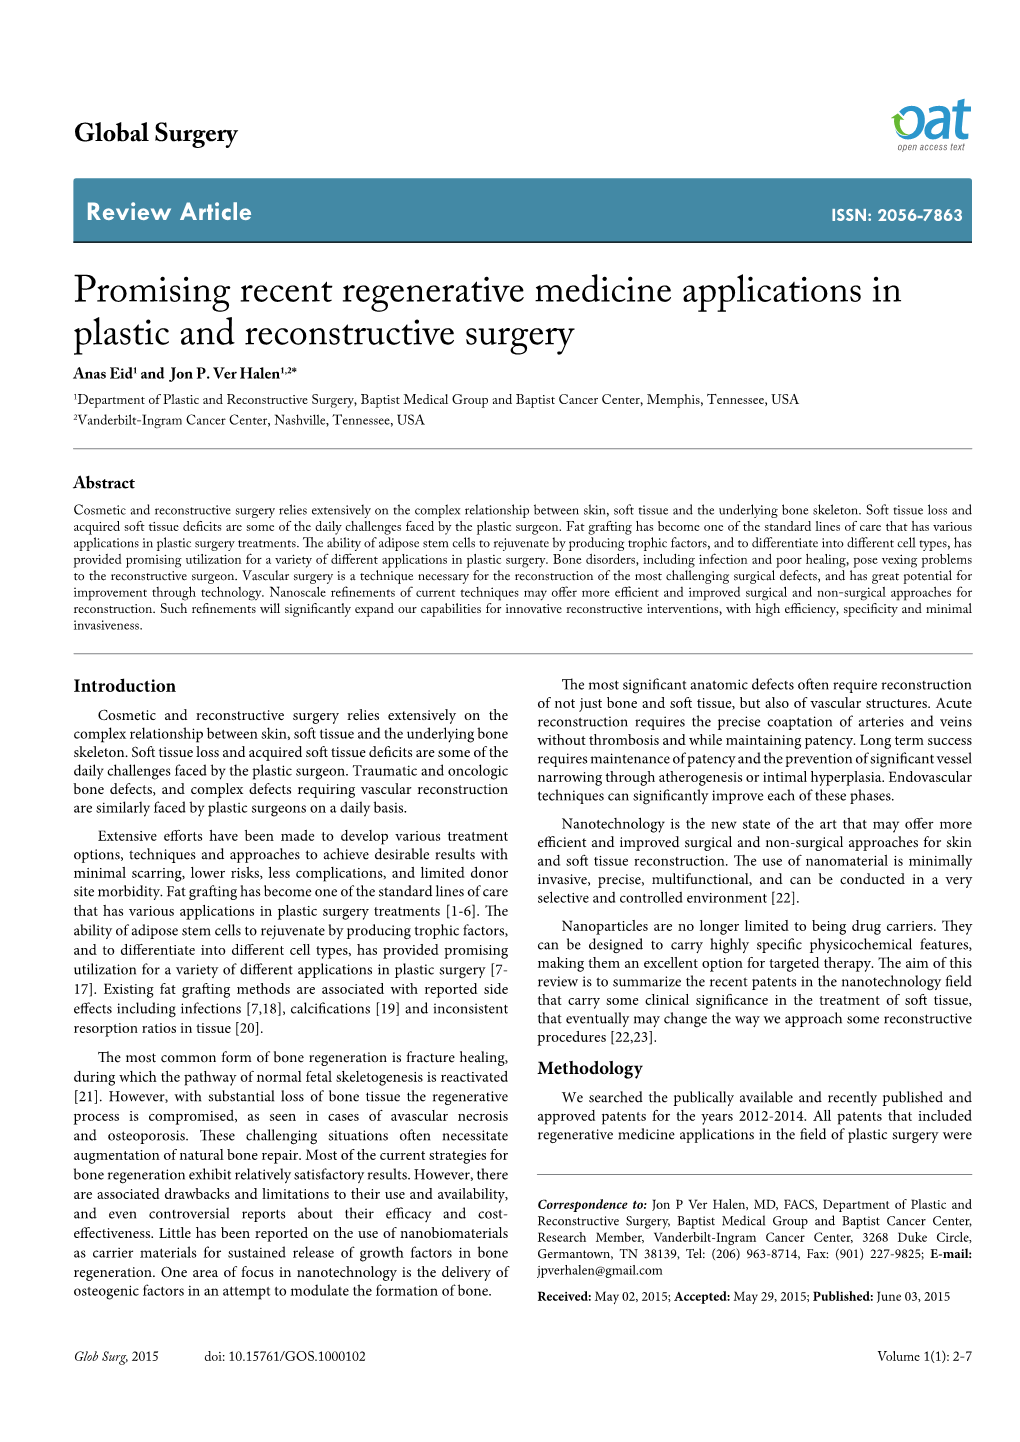 Promising Recent Regenerative Medicine Applications in Plastic and Reconstructive Surgery Anas Eid1 and Jon P